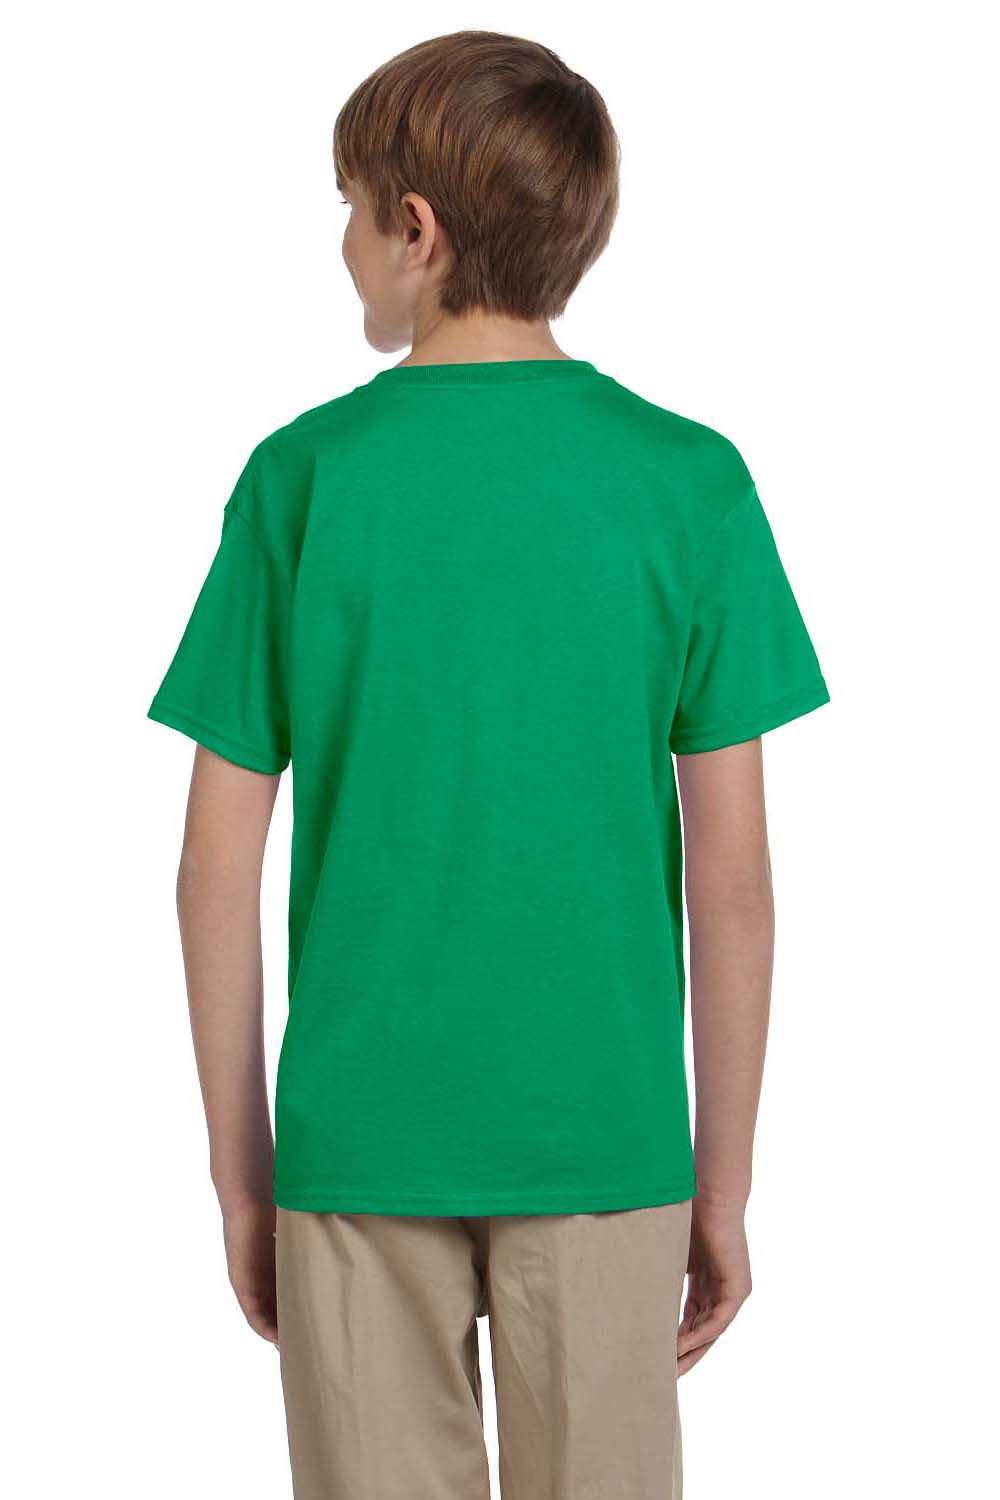 Hanes 5370 Youth EcoSmart Short Sleeve Crewneck T-Shirt Kelly Green Back